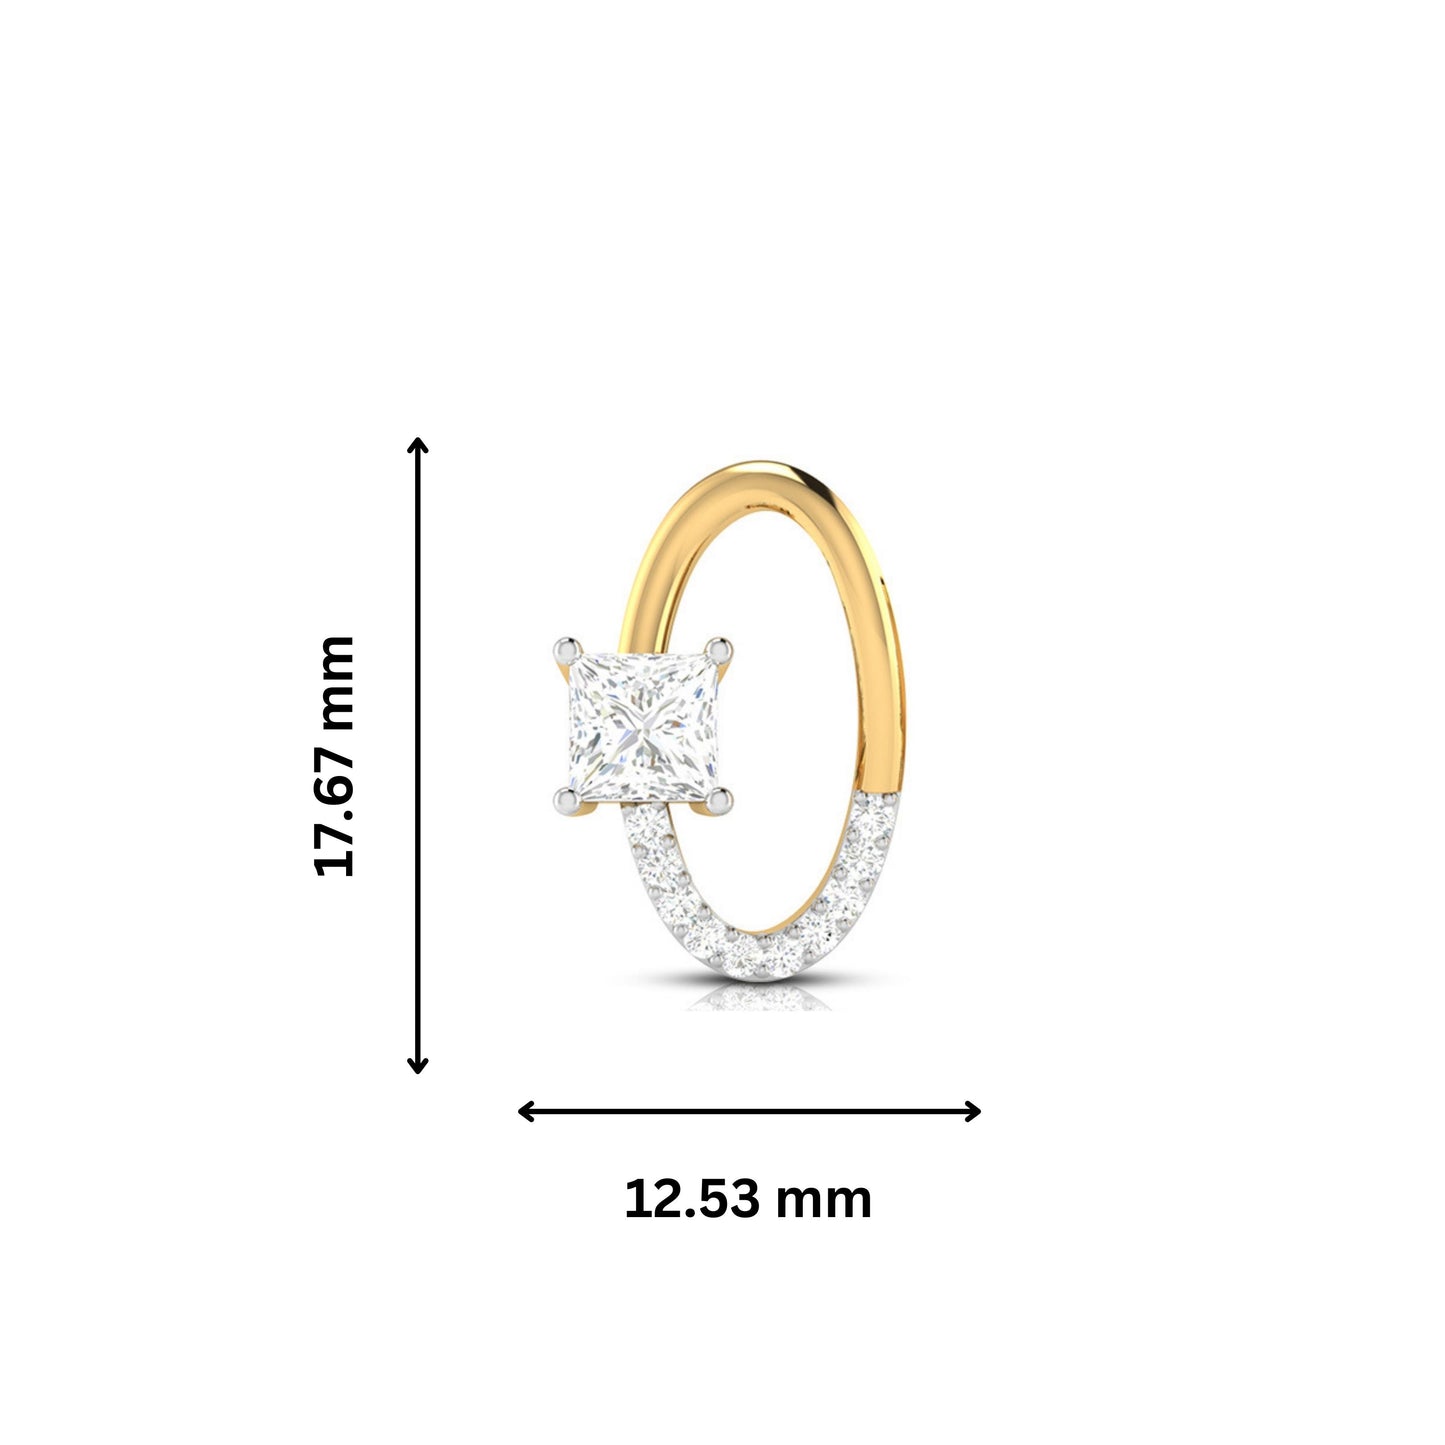 Latest earrings design Swarovski Lab Grown Diamond Earrings Fiona Diamonds